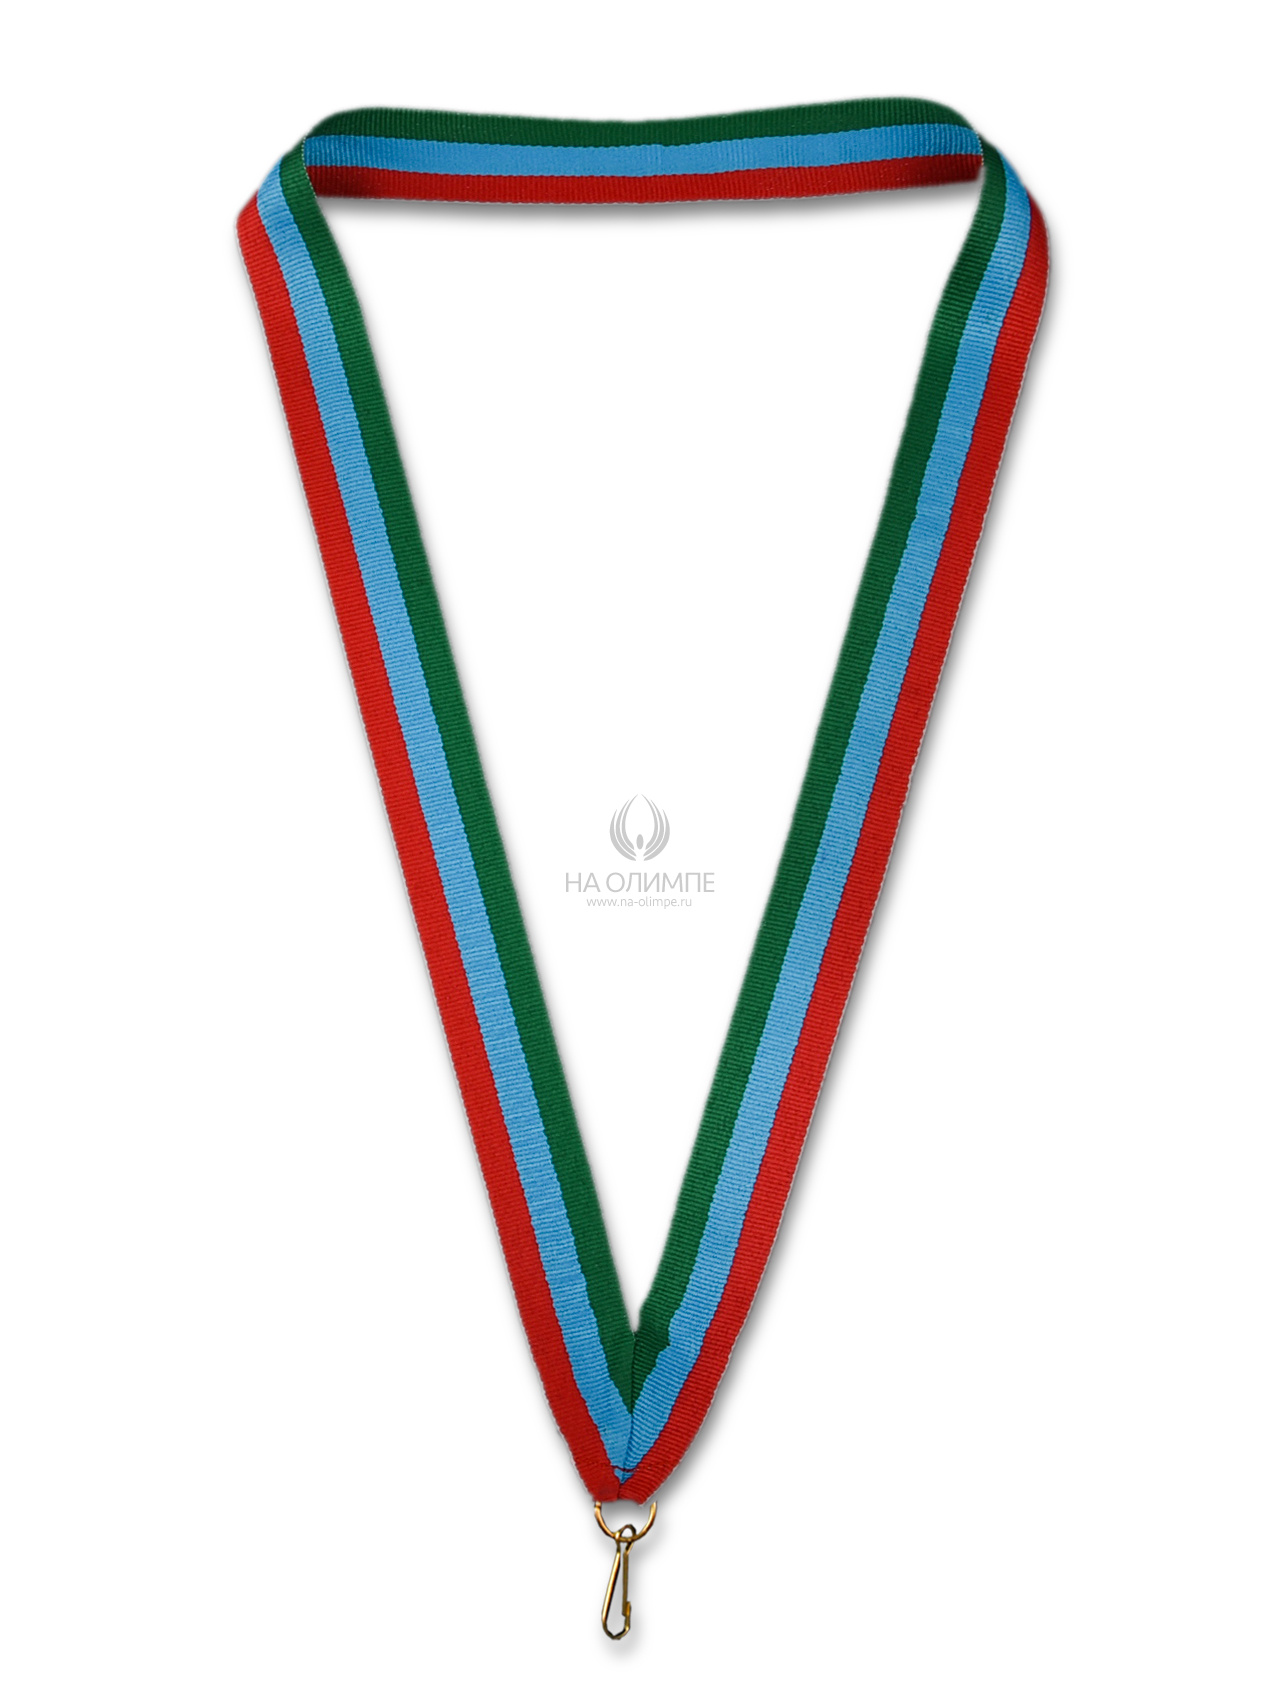 Лента для медали (Дагестан), ширина ленты 22 мм